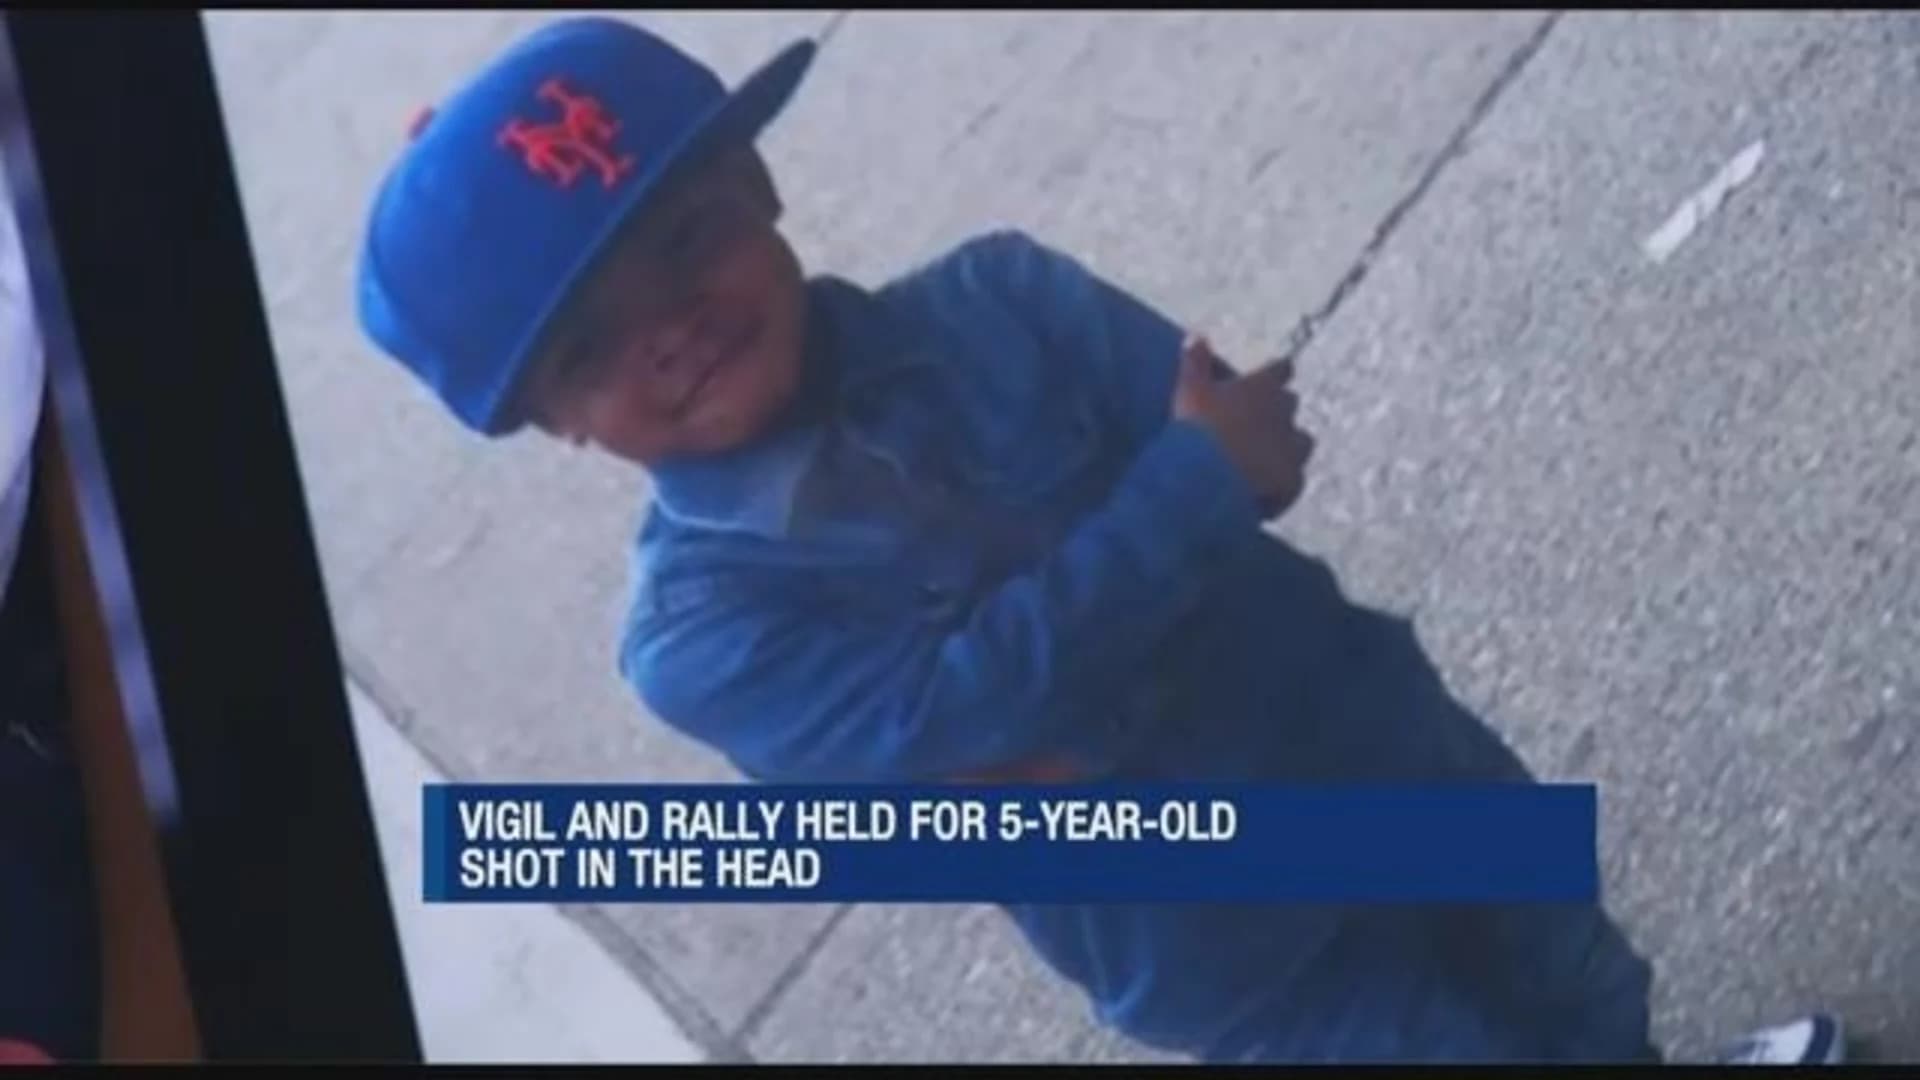 Prayer vigil held for 5-year-old boy shot in head